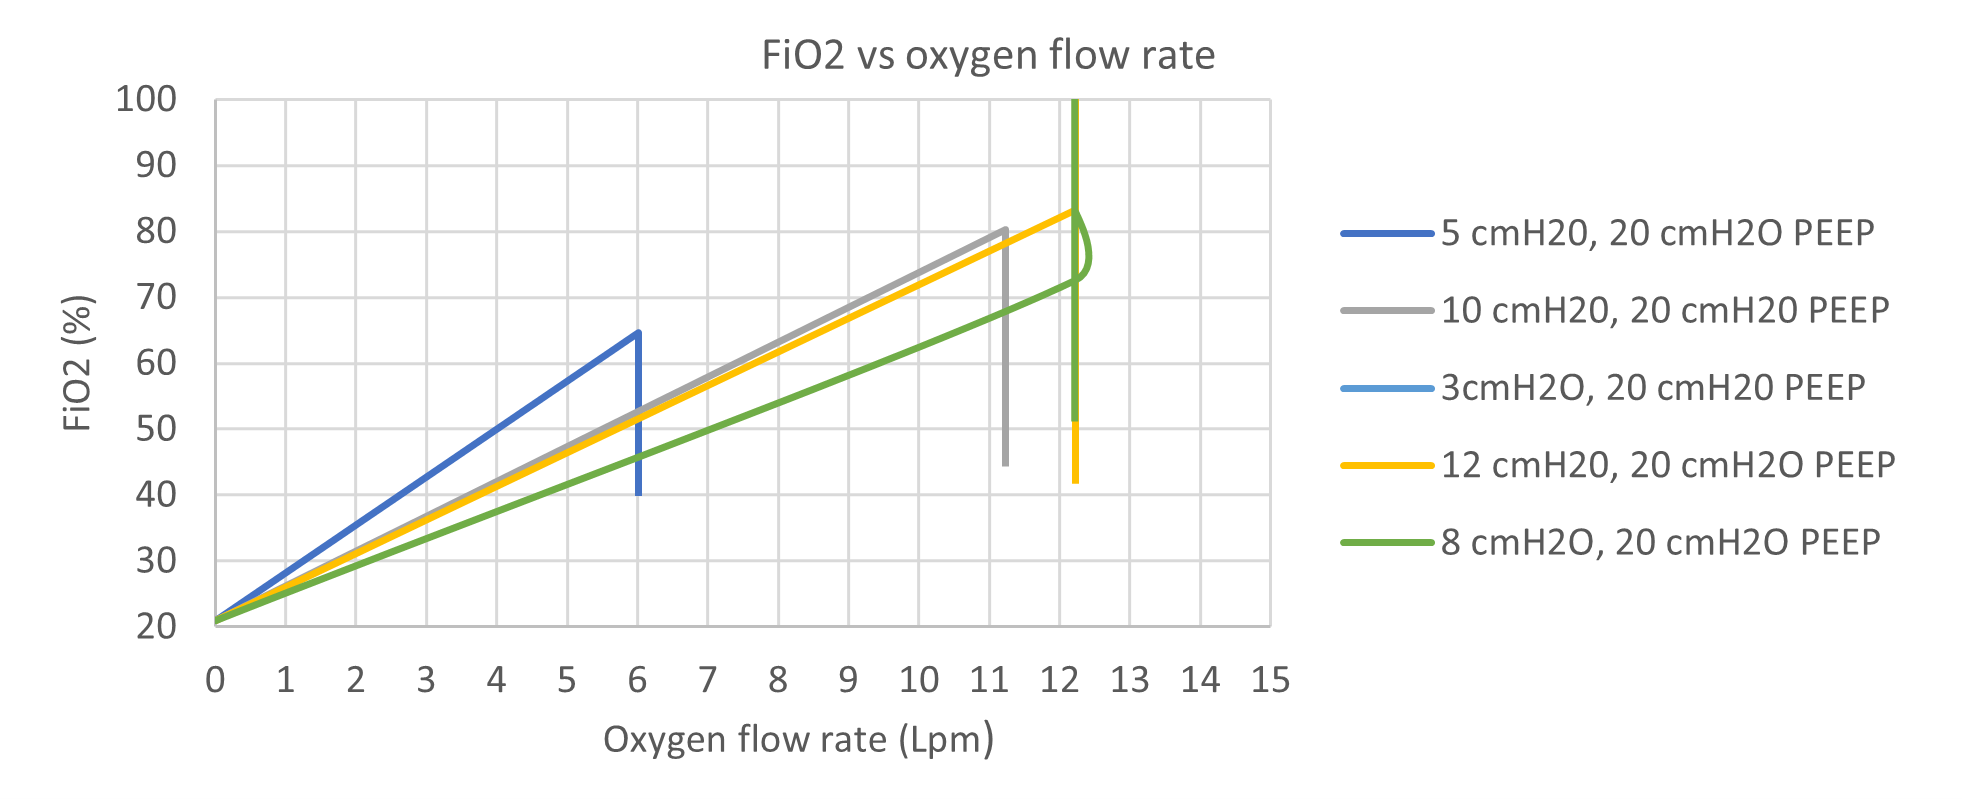 Figure 14: FiO<sub>2</sub> vs O2 flowrate different user inputs